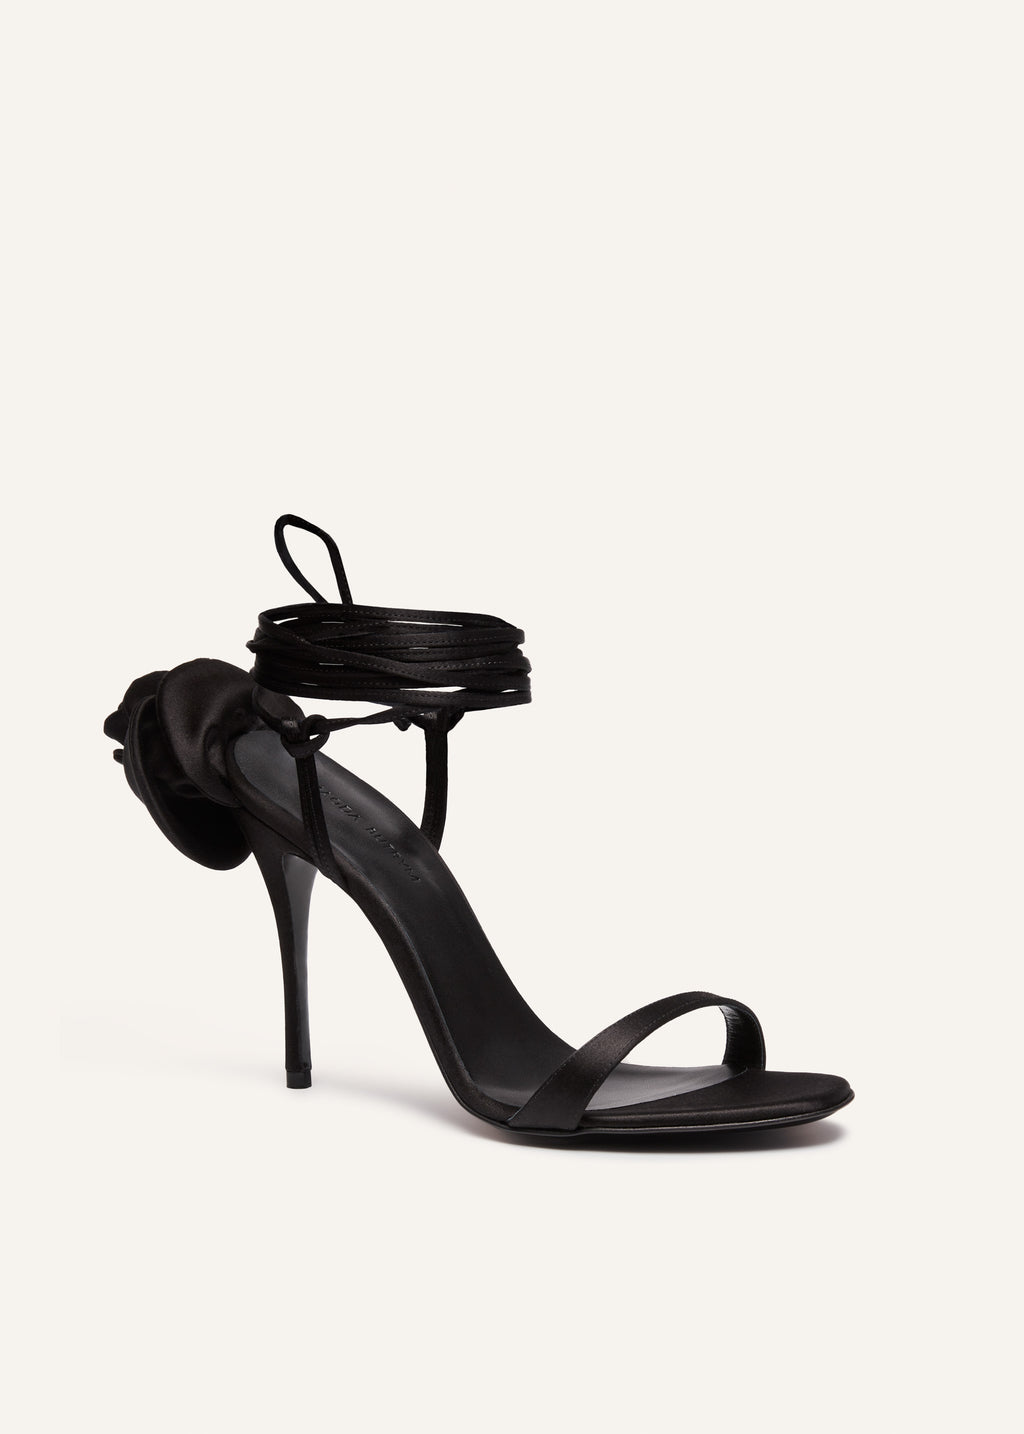 Wrap around double flower sandals in black | Magda Butrym